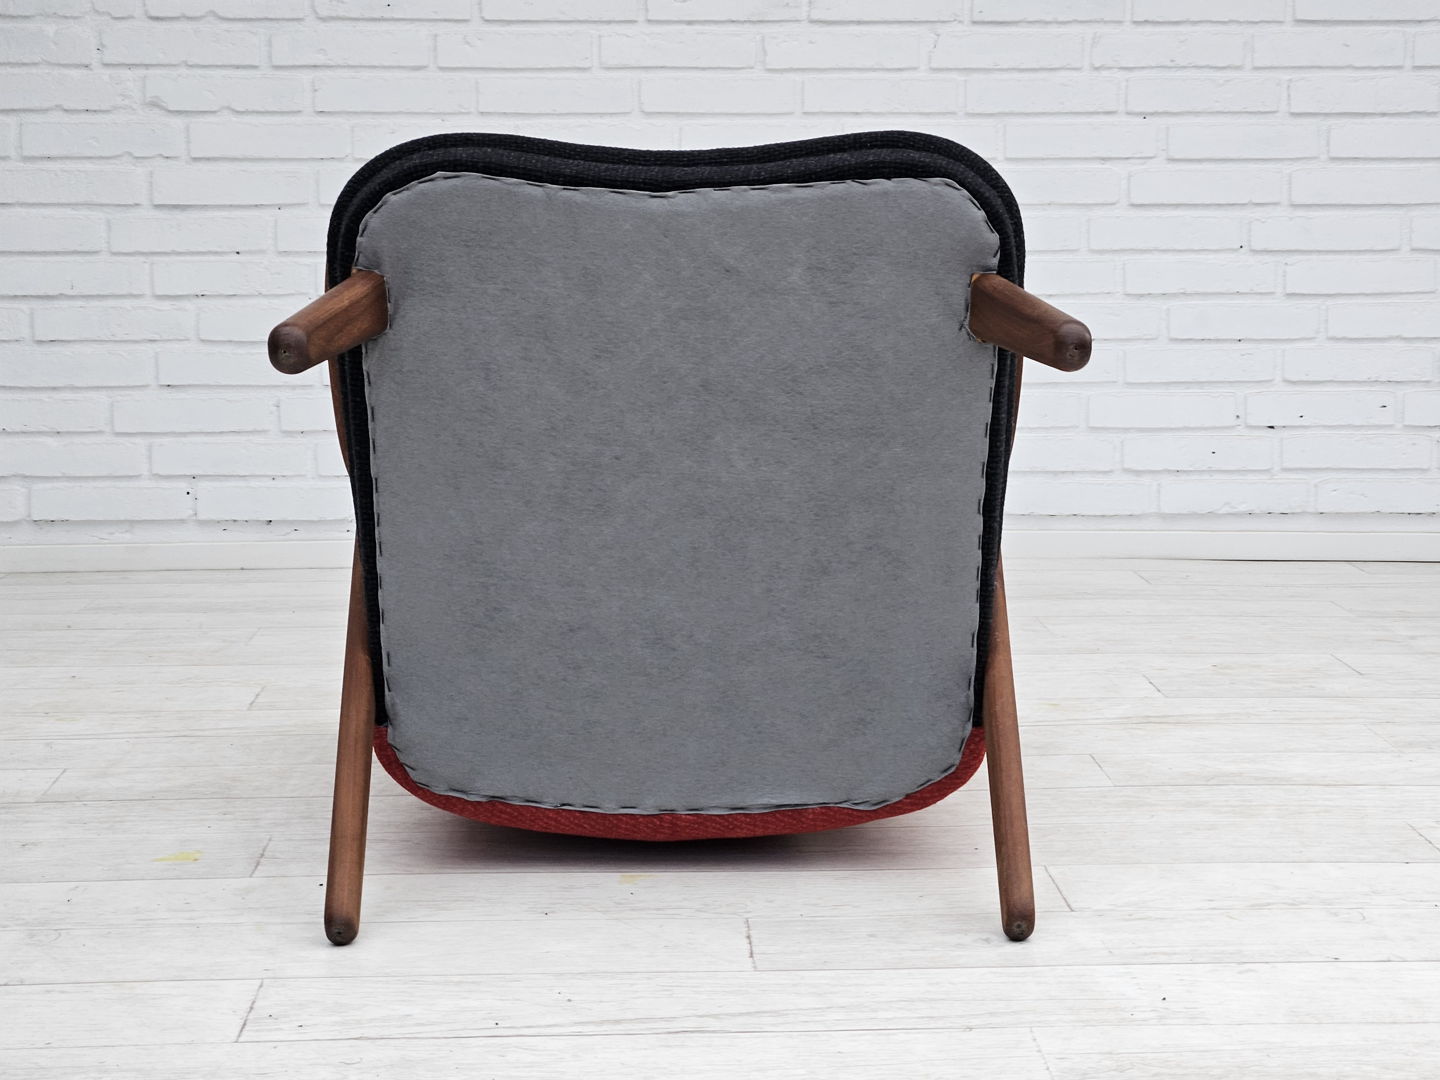 1960s, Danish design by Erhardsen & Andersen, reupholstered armchair, furniture wool, teak wood.